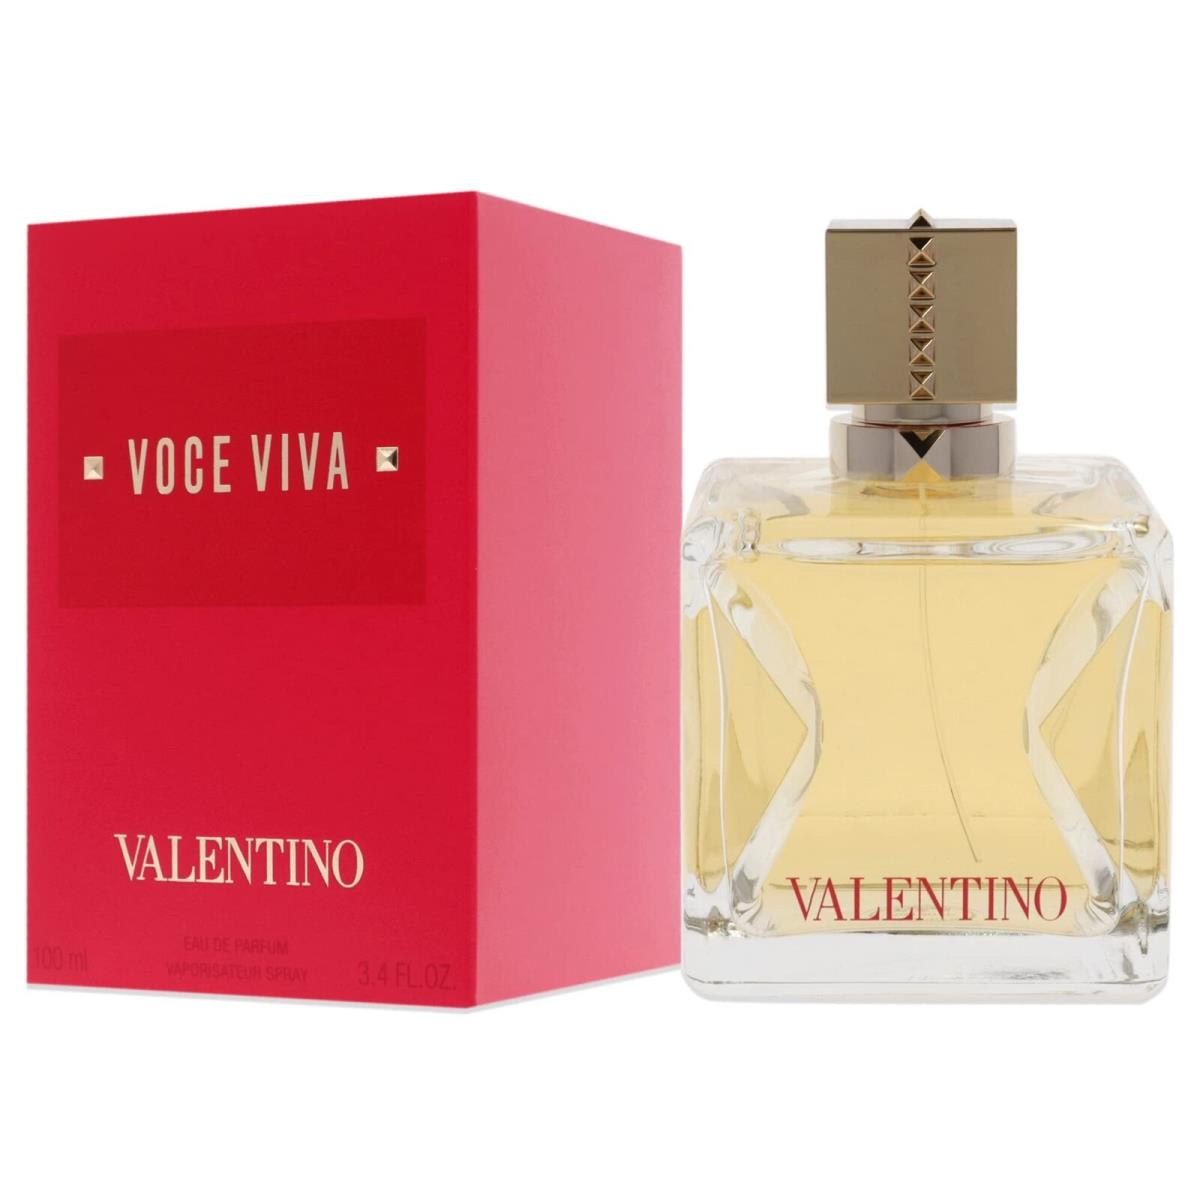 Voce Viva Perfume by Valentino 3.4 oz/100 ml Eau De Parfum Spray For Women